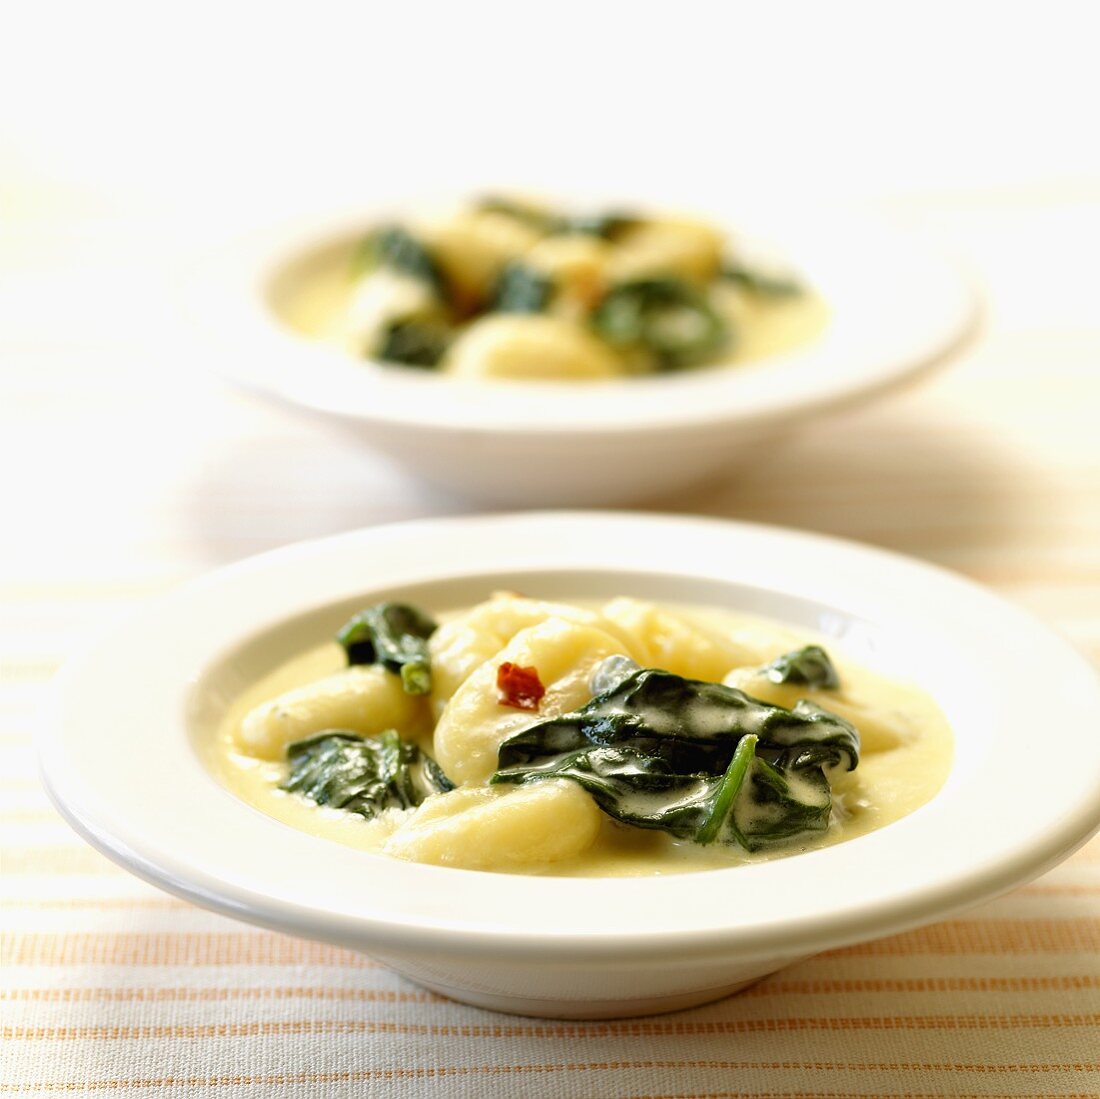 Gnocchi with spinach in cream sauce